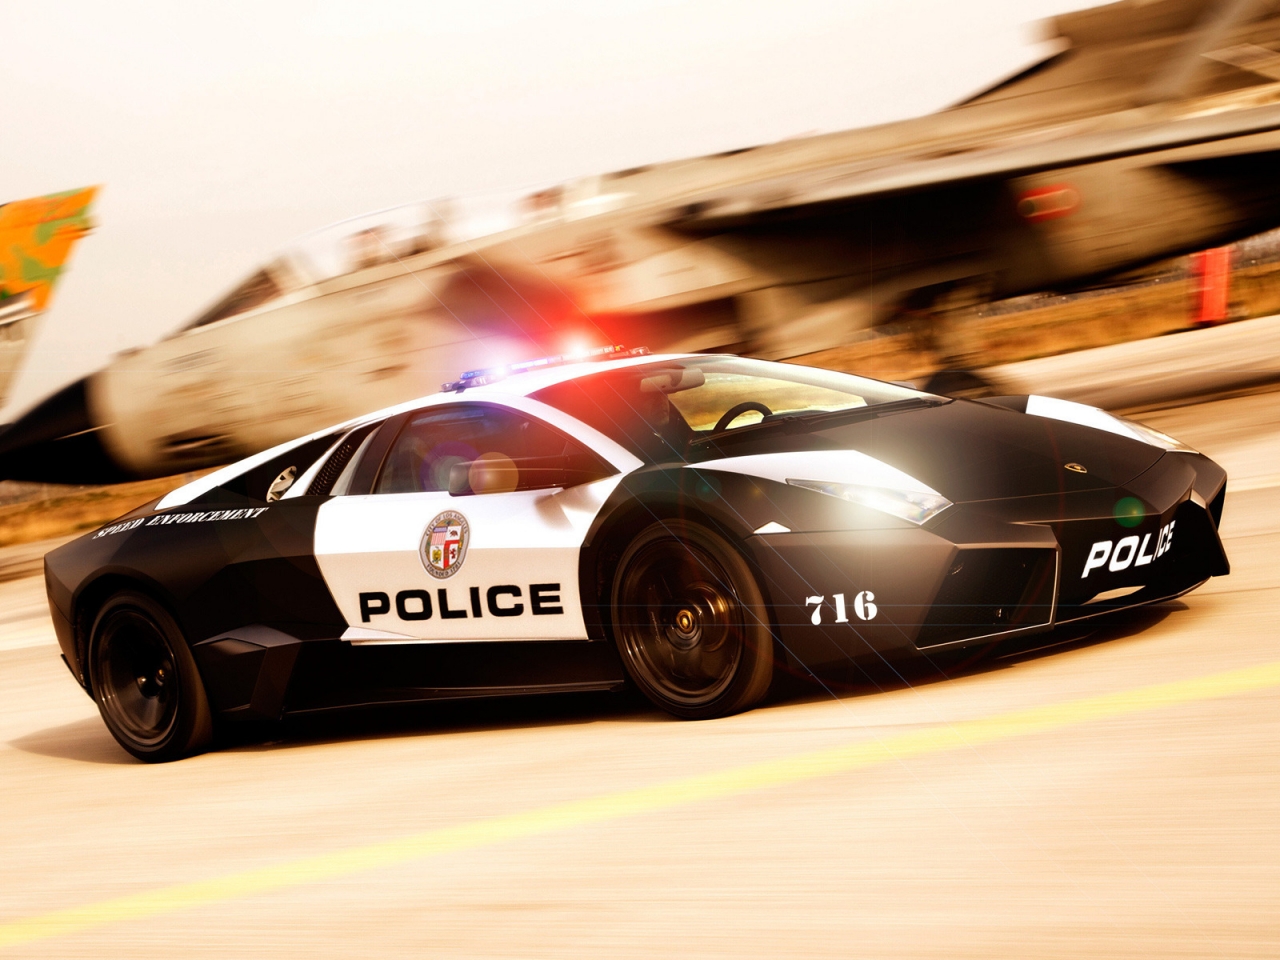 Lamborghini Police Car NFS for 1280 x 960 resolution